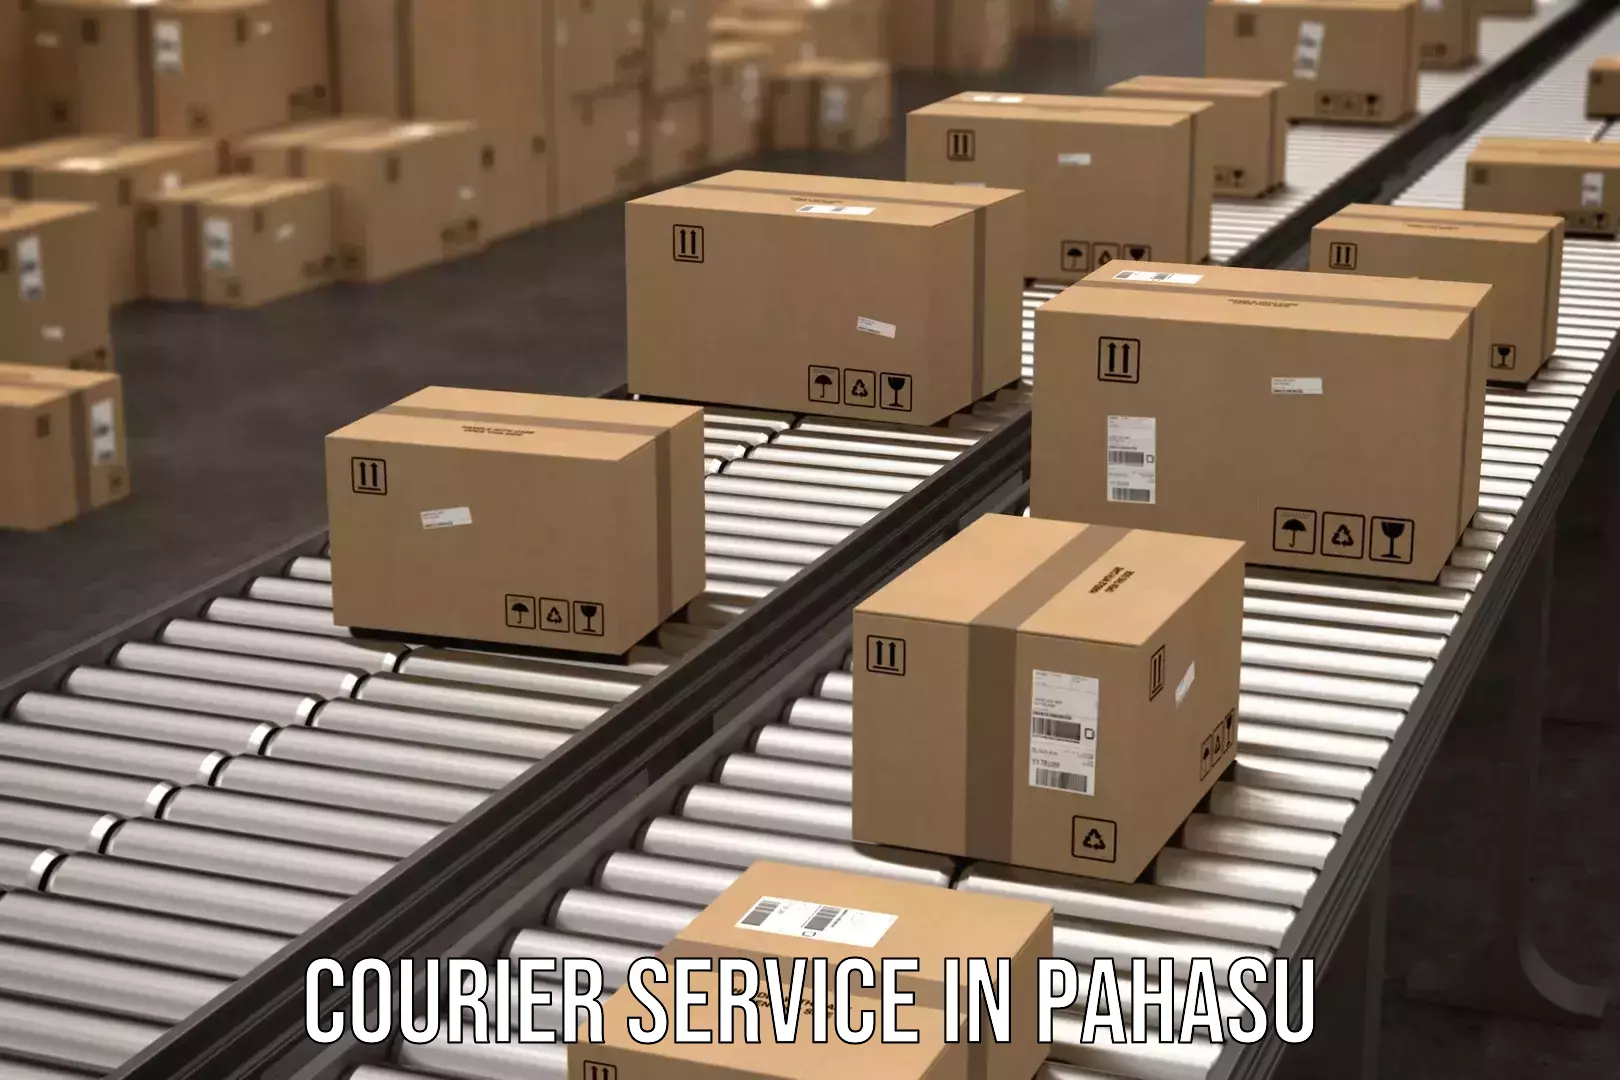 Advanced shipping technology in Pahasu